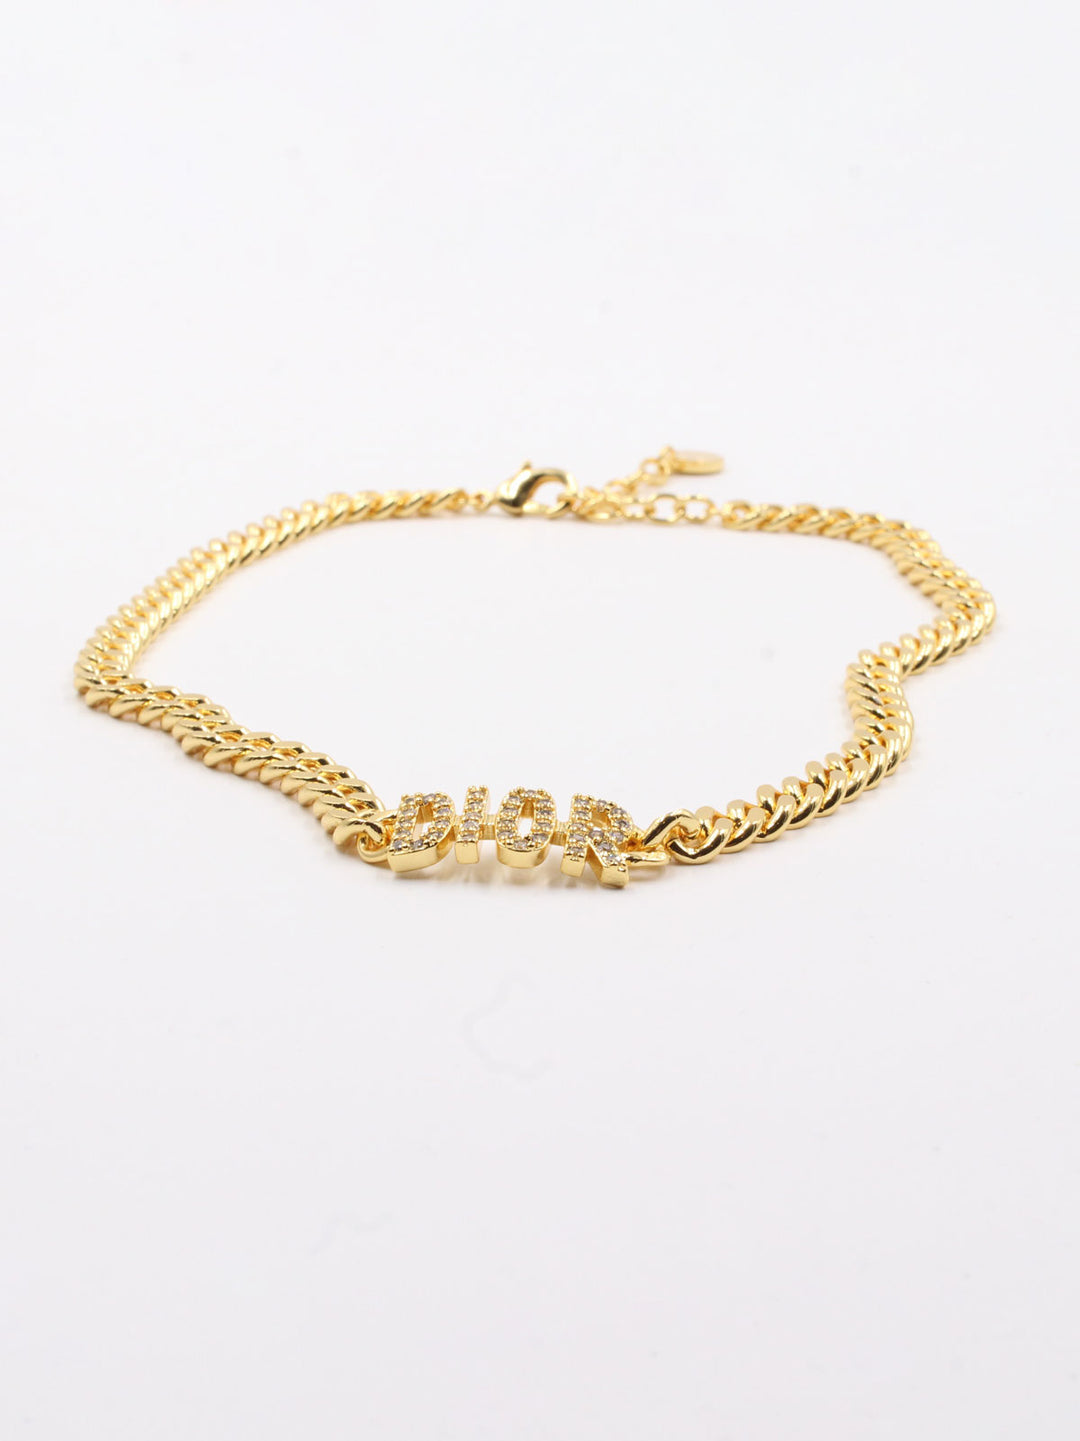 Dior zircon necklace - سلسال ديور زركون  - Jewel